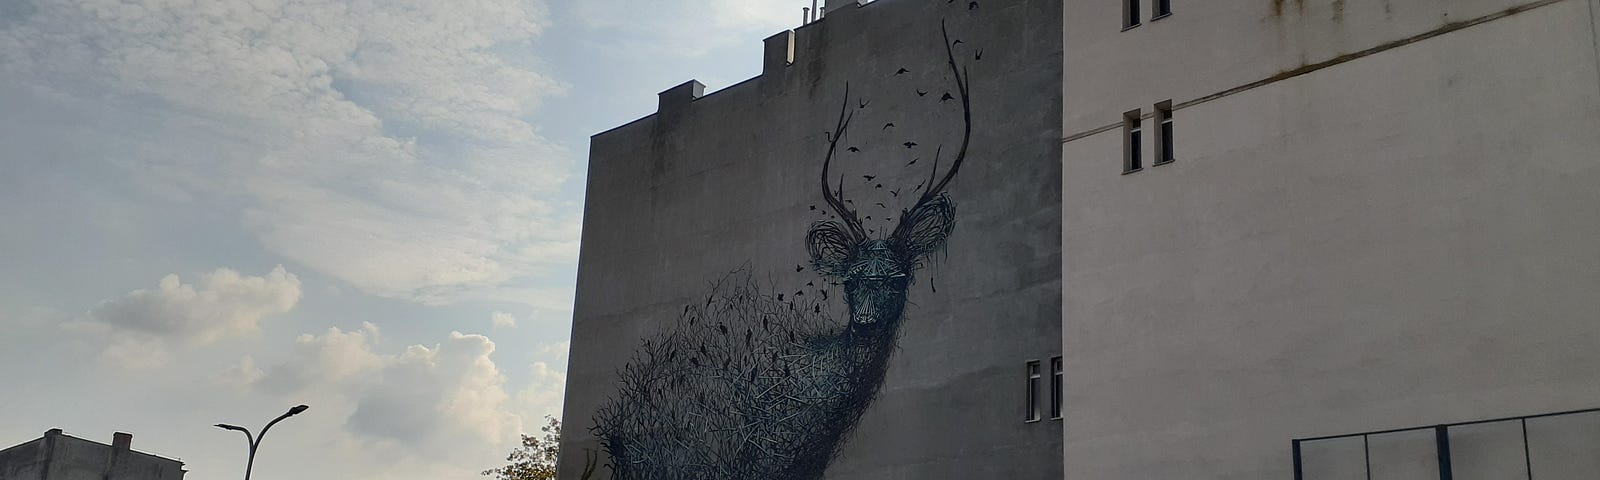 The Murals in Łódź, Poland (a big deer on the wall)